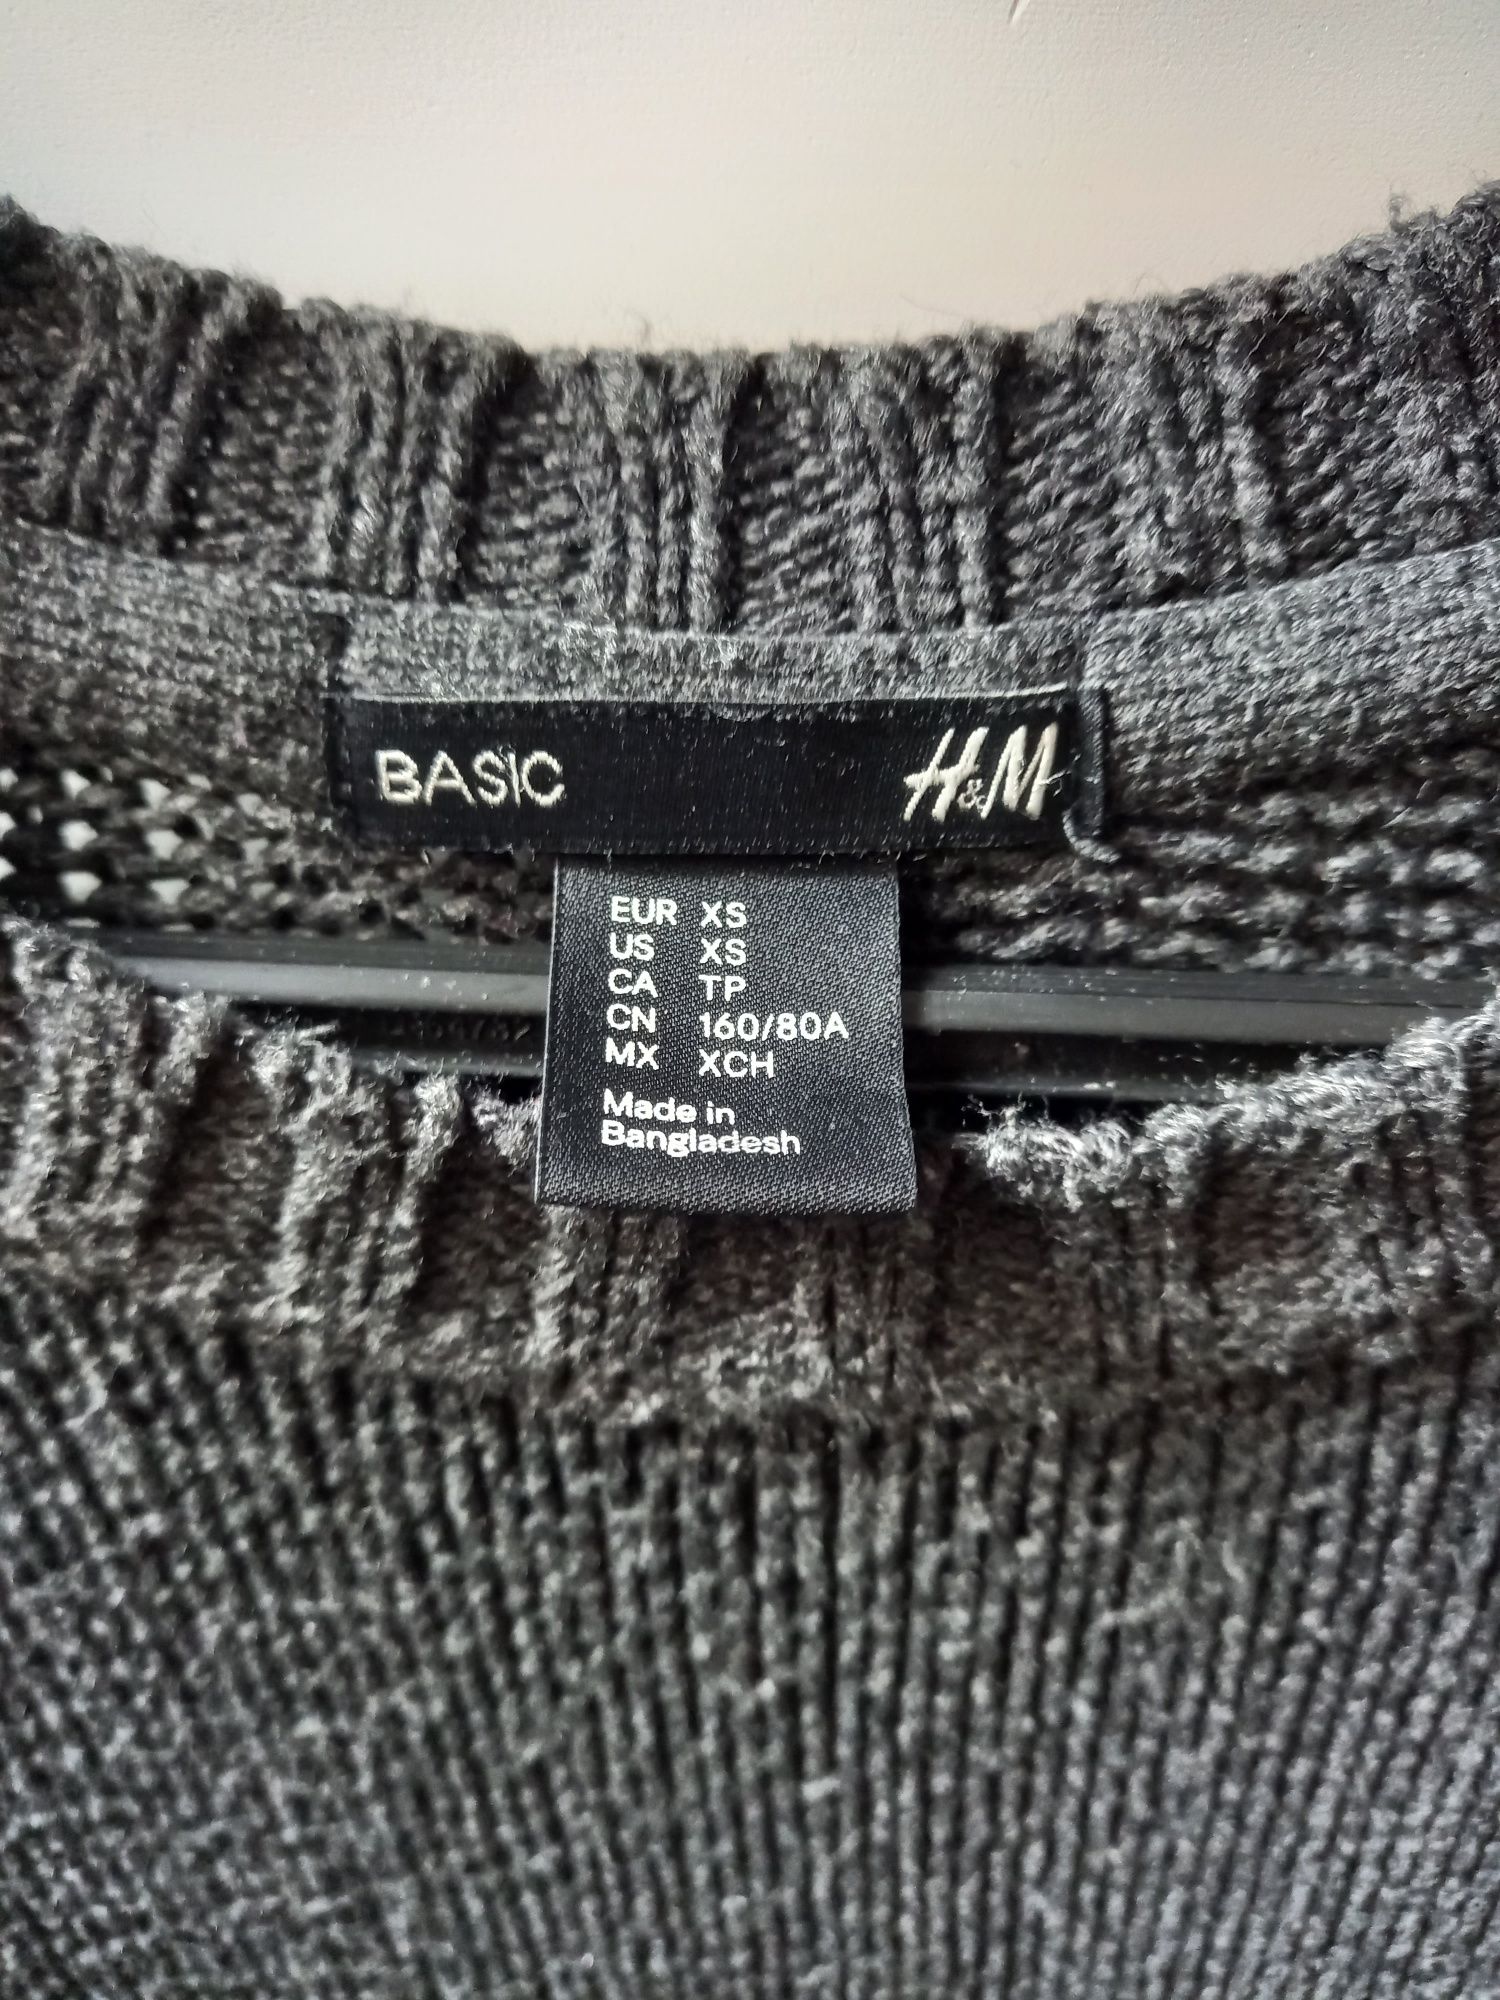 Szary sweter długi H&M S - M